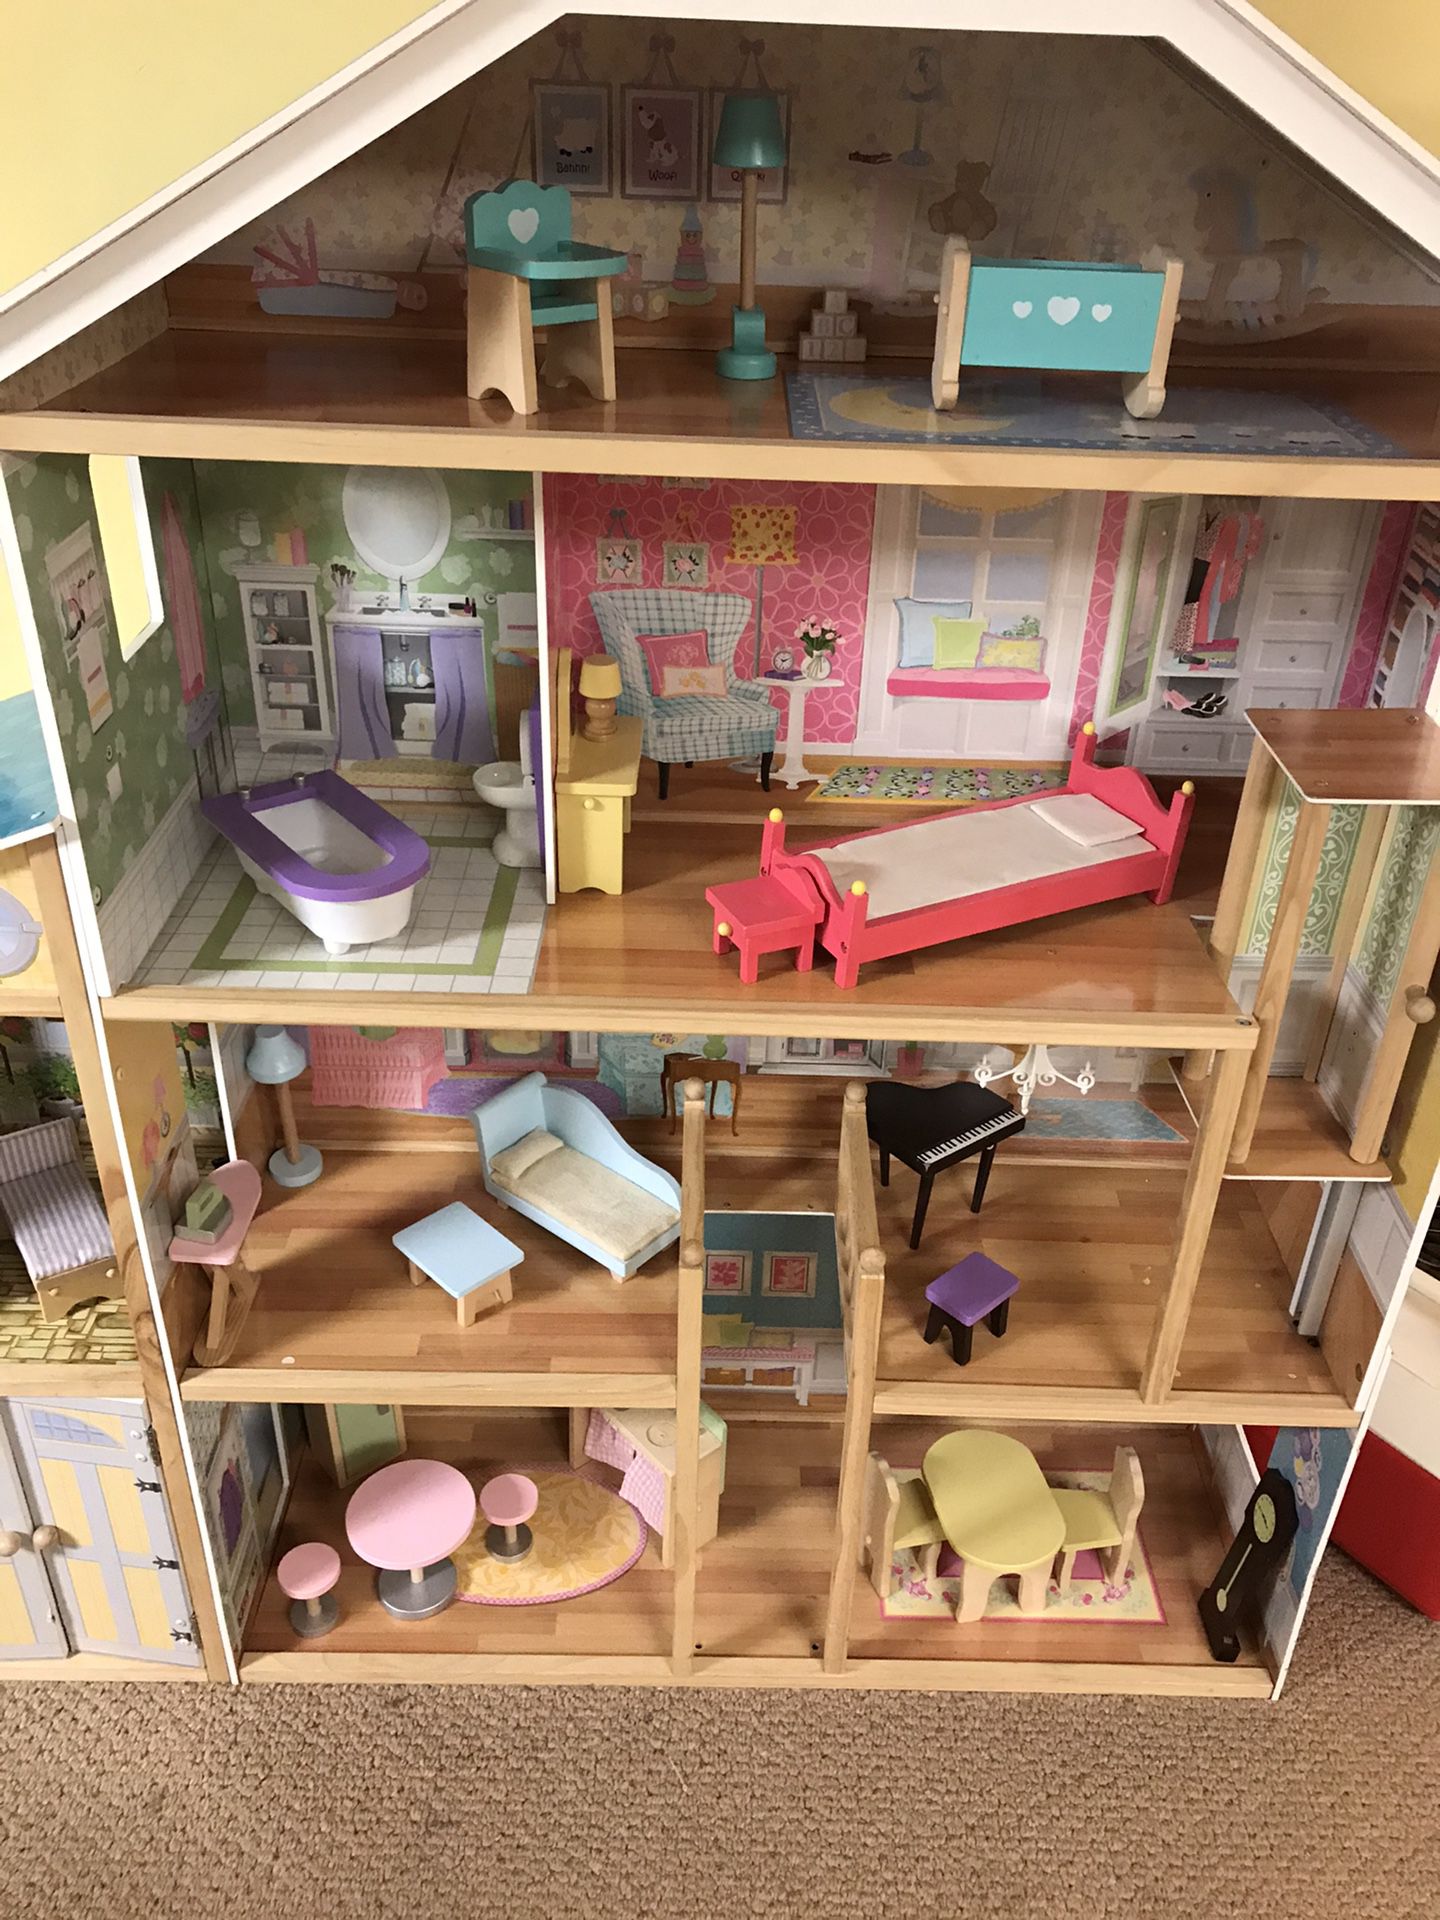 Kidcraft dollhouse